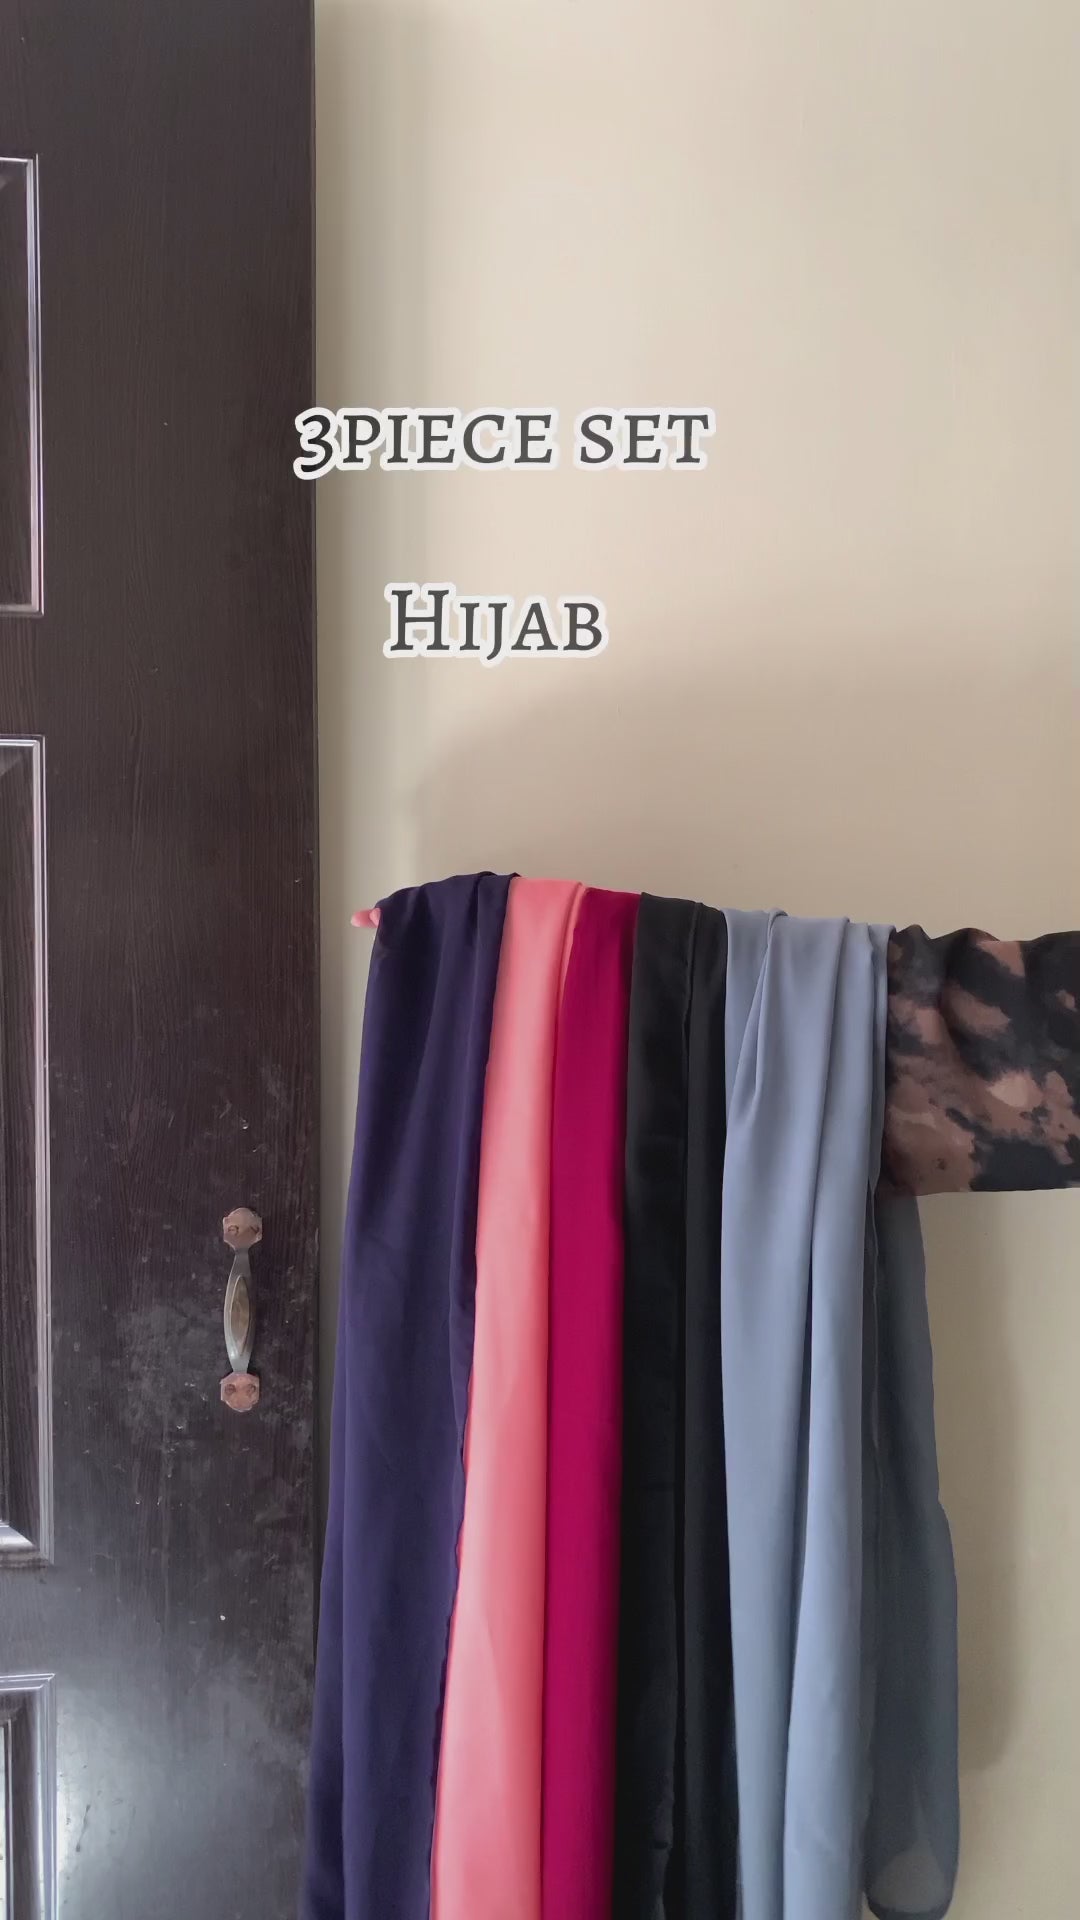 Complete Hijab Set